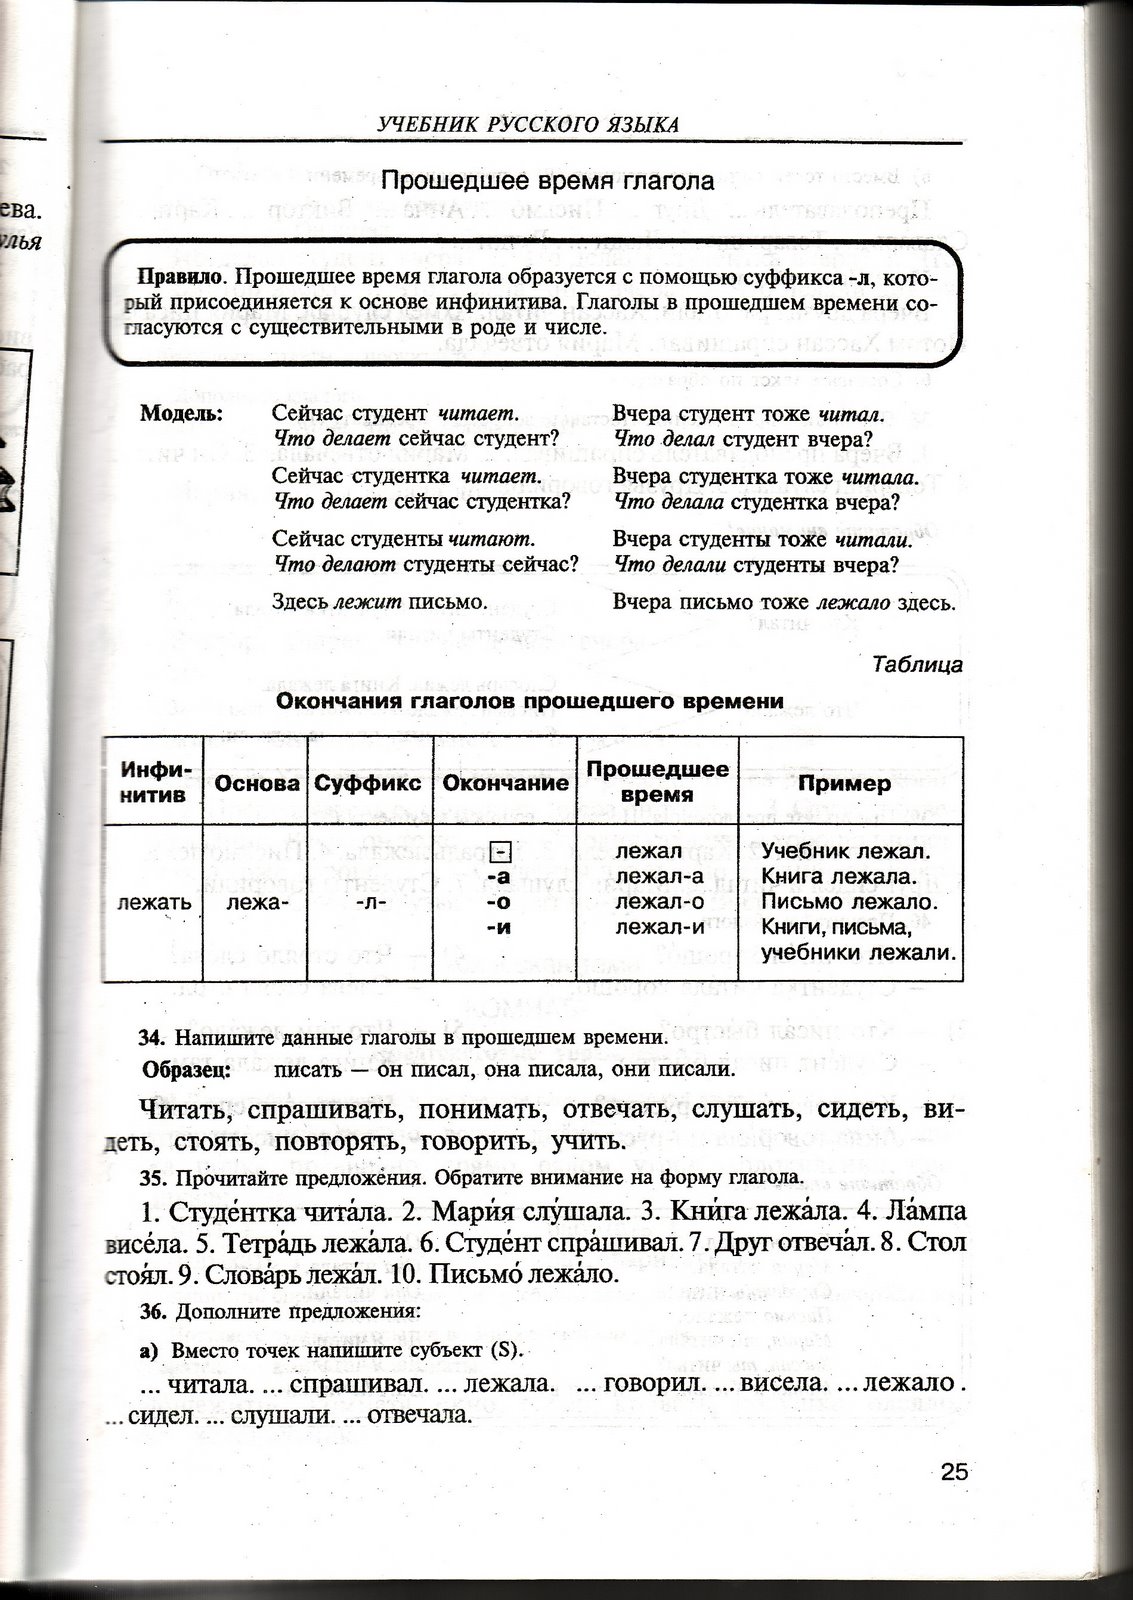 This Russian Grammar Book Sure 33